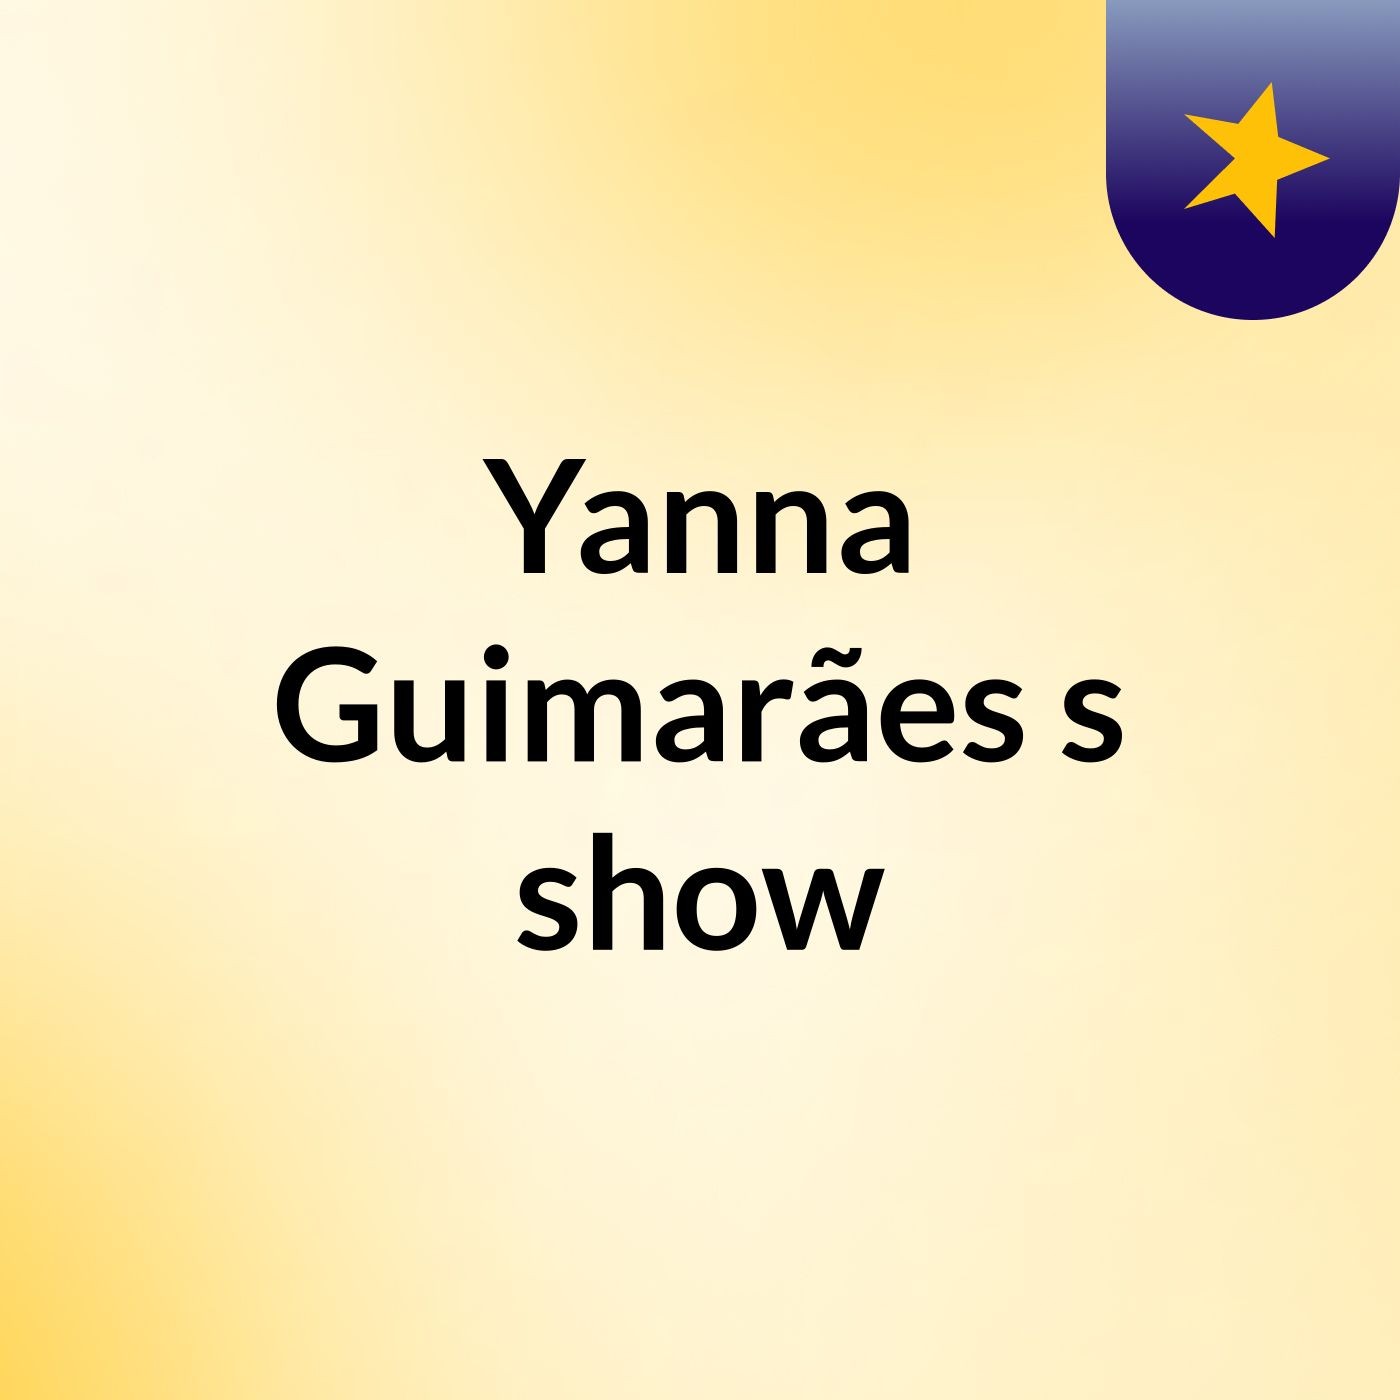 Episódio 3 - Yanna Guimarães's show